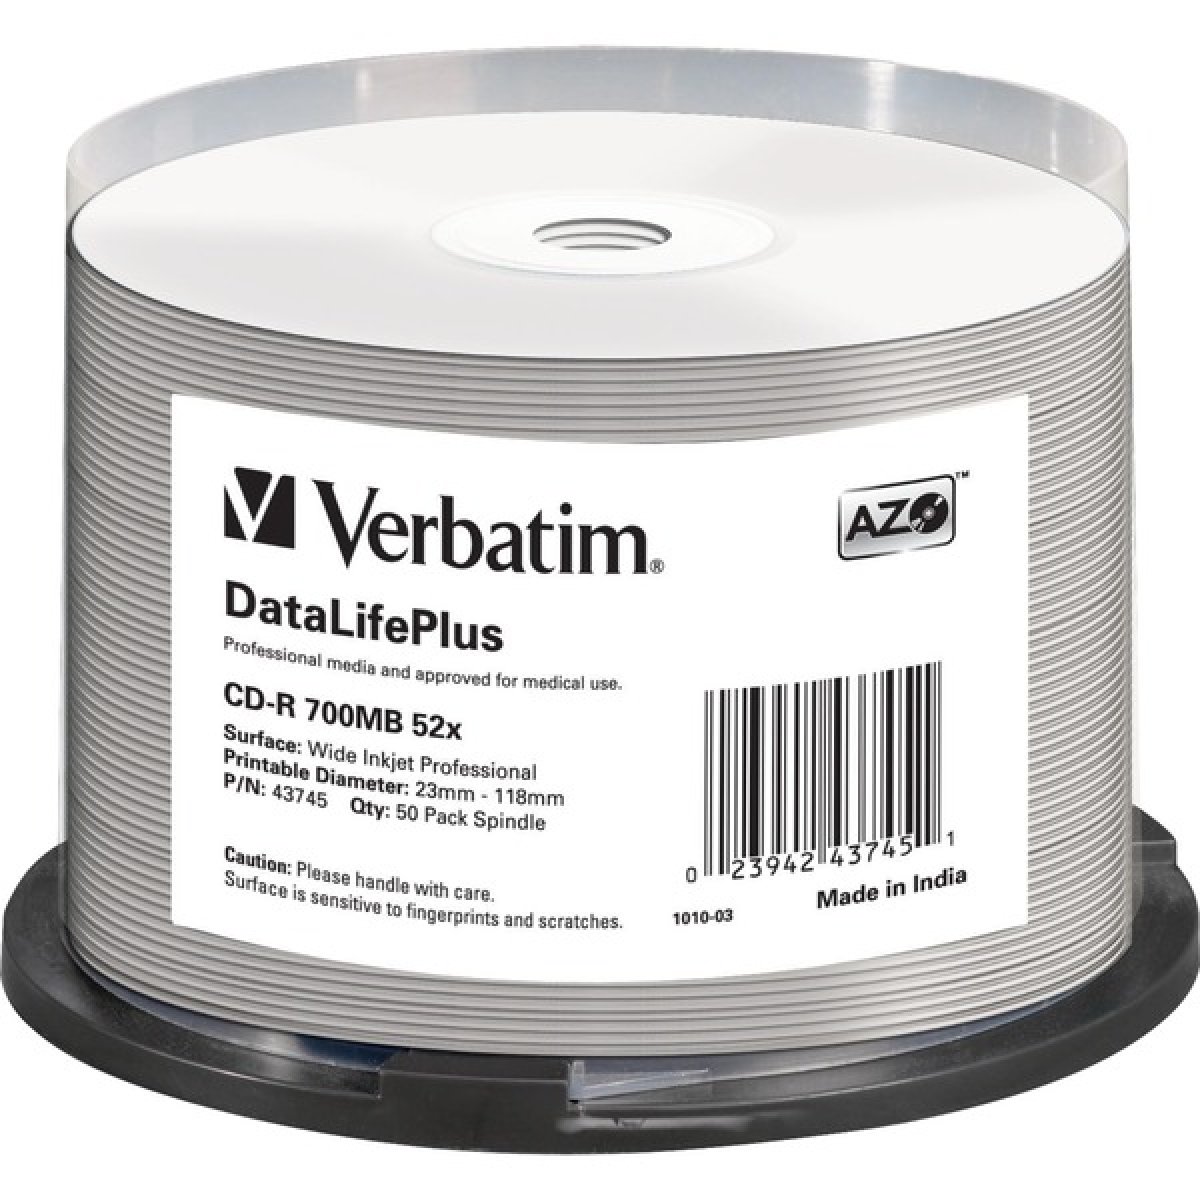 Verbatim Professional CD-R 700 MB 52x imprimable blanche 50 pièces